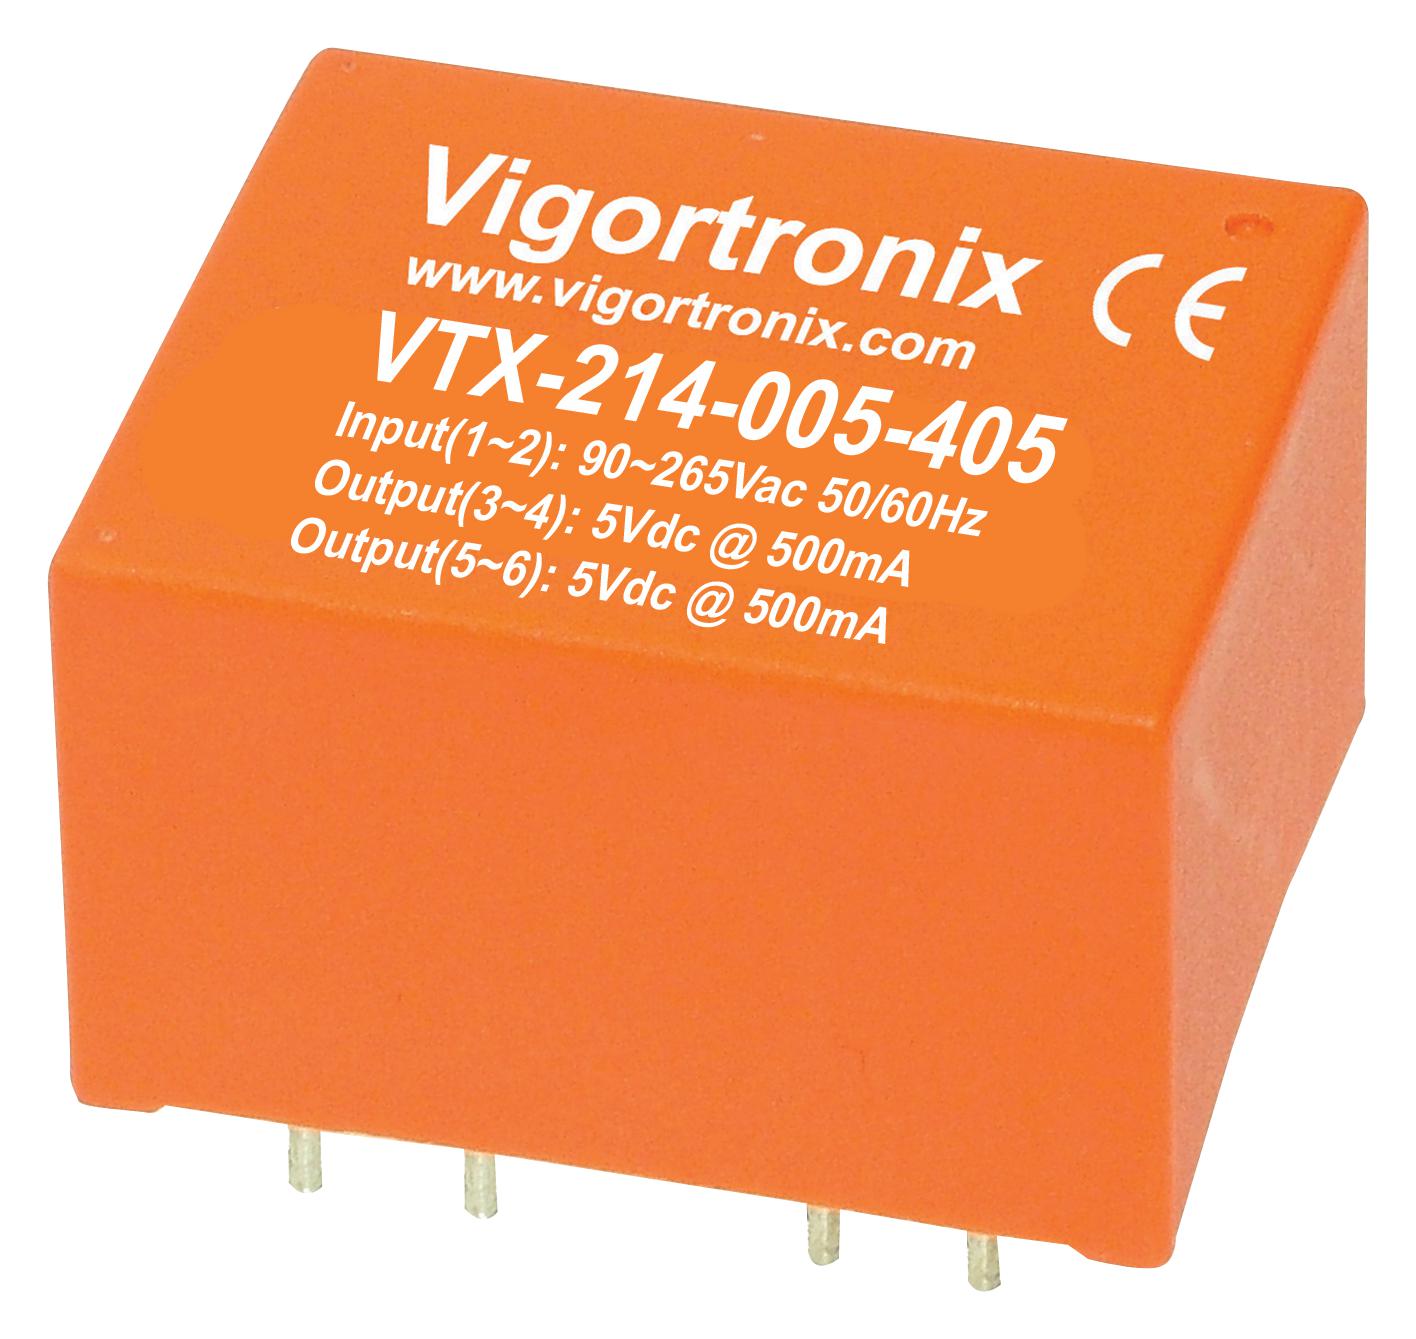 VTX-214-005-0312 POWER SUPPLY, AC-DC, 3.3V, 0.757A VIGORTRONIX